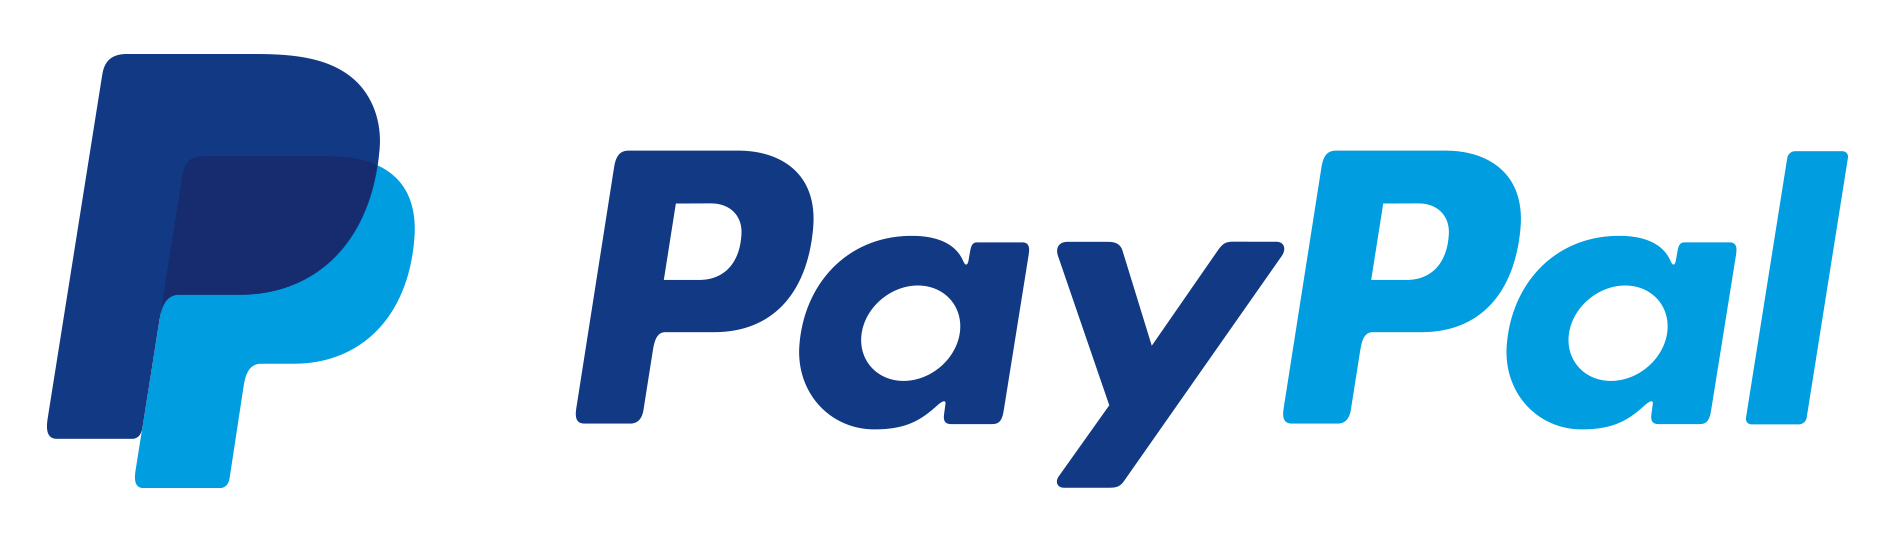 paypal logo cucciashop.it